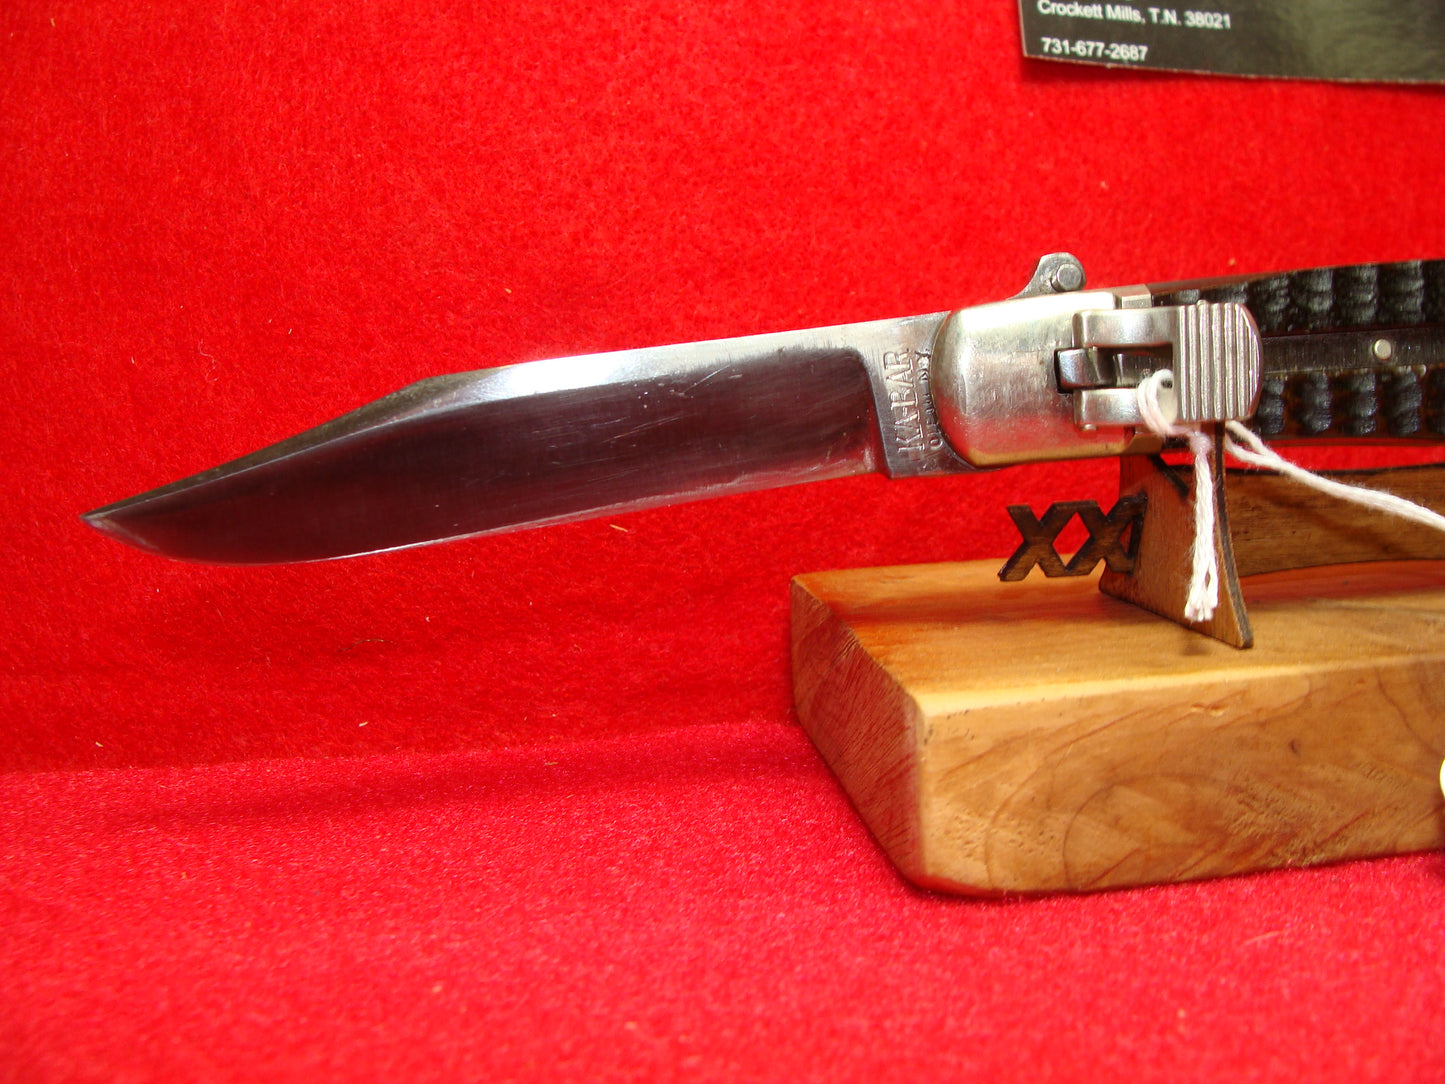 KA-BAR OLEAN NY 61105 1923-40 LEVER AUTOMATIC 8" AMERICAN AUTOMATIC KNIFE GREEN BONE HANDLES